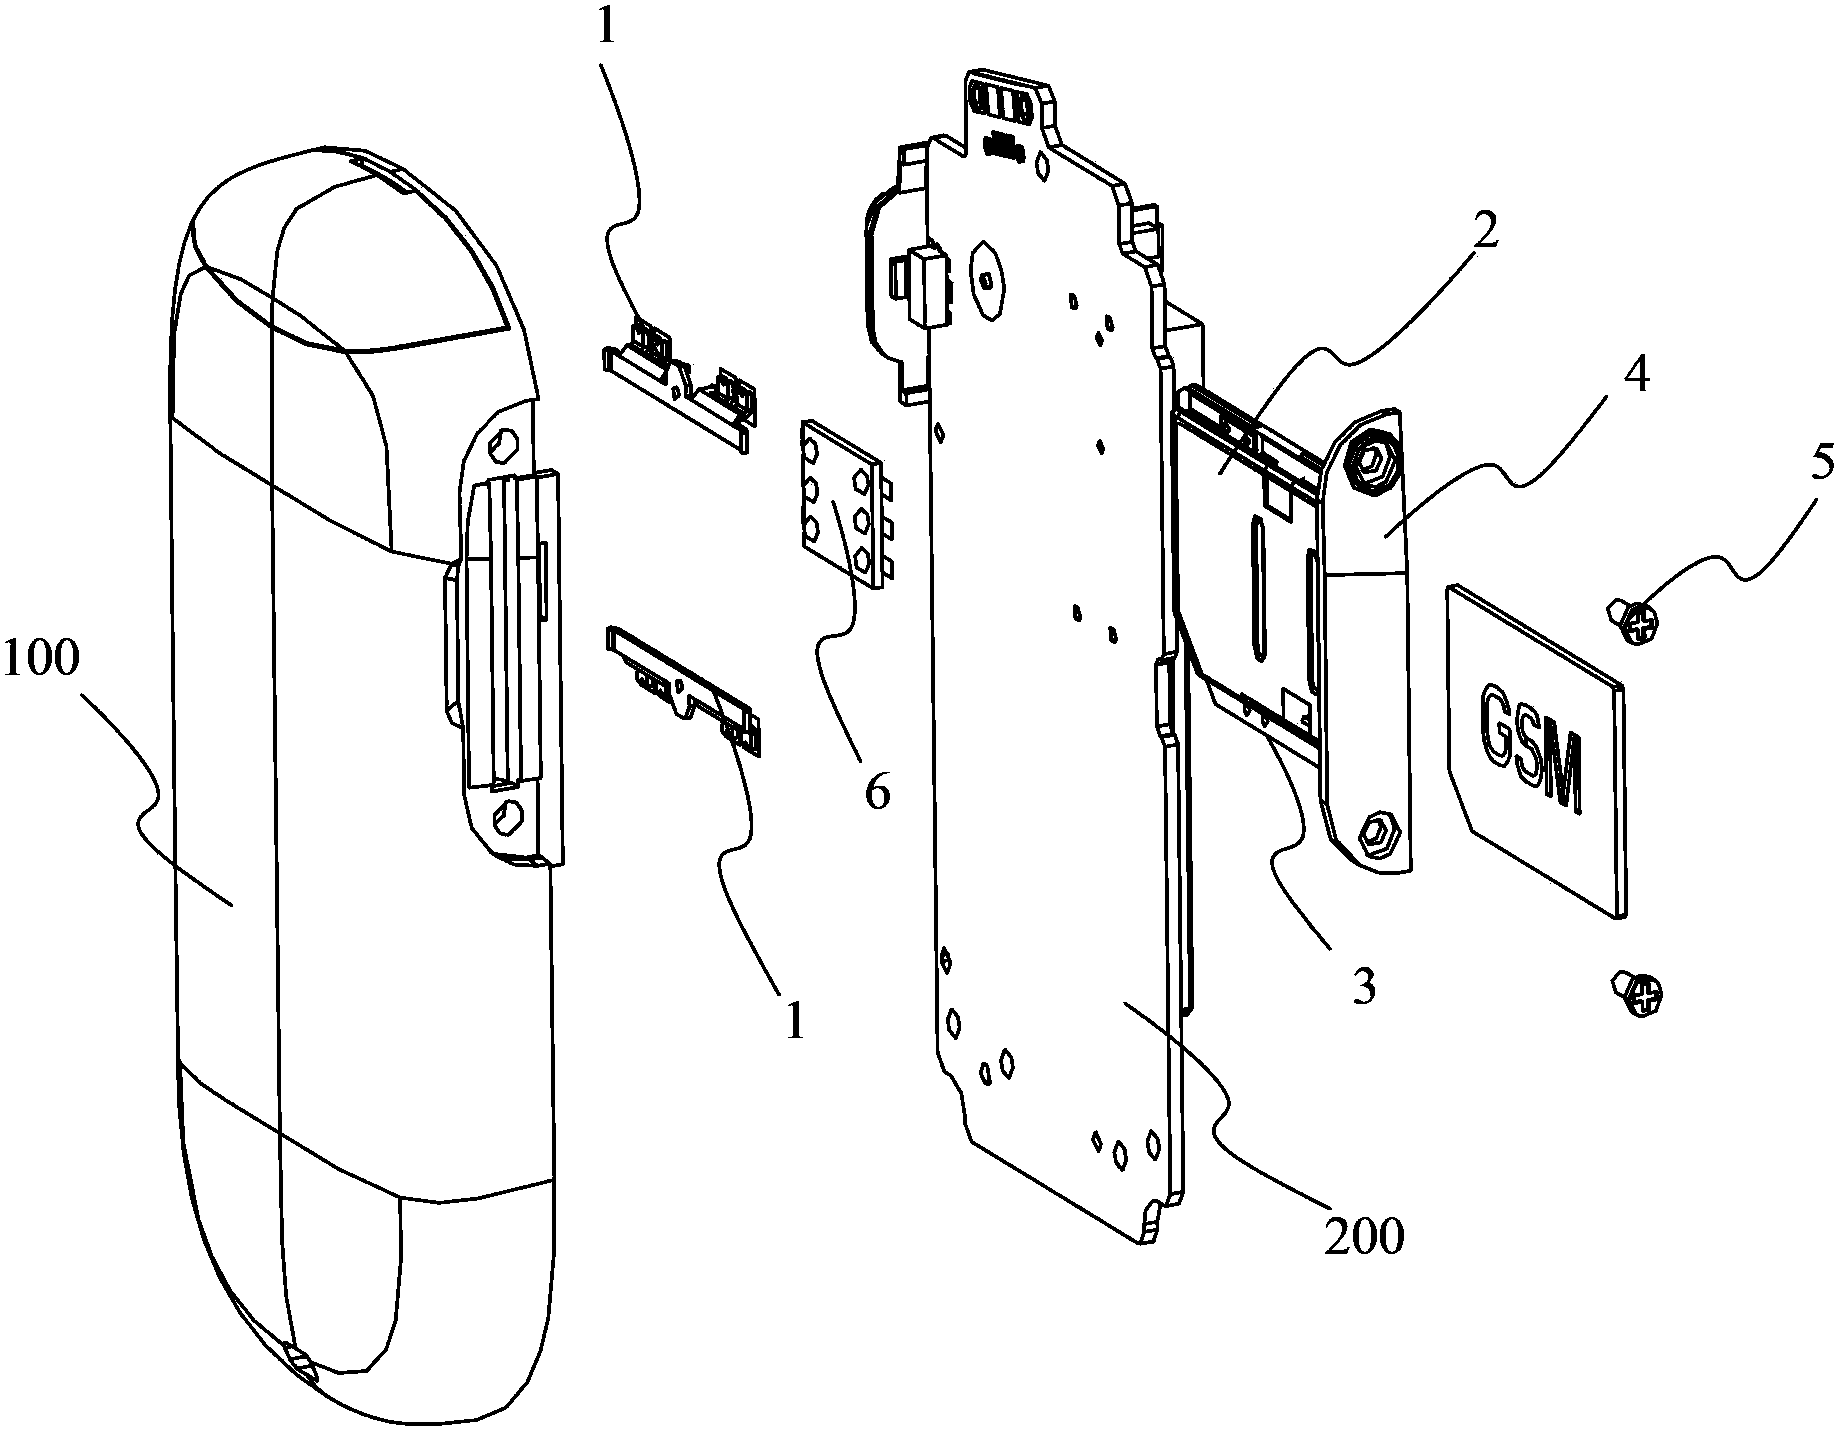 Drawer-type mobile phone SIM card inserting mechanism